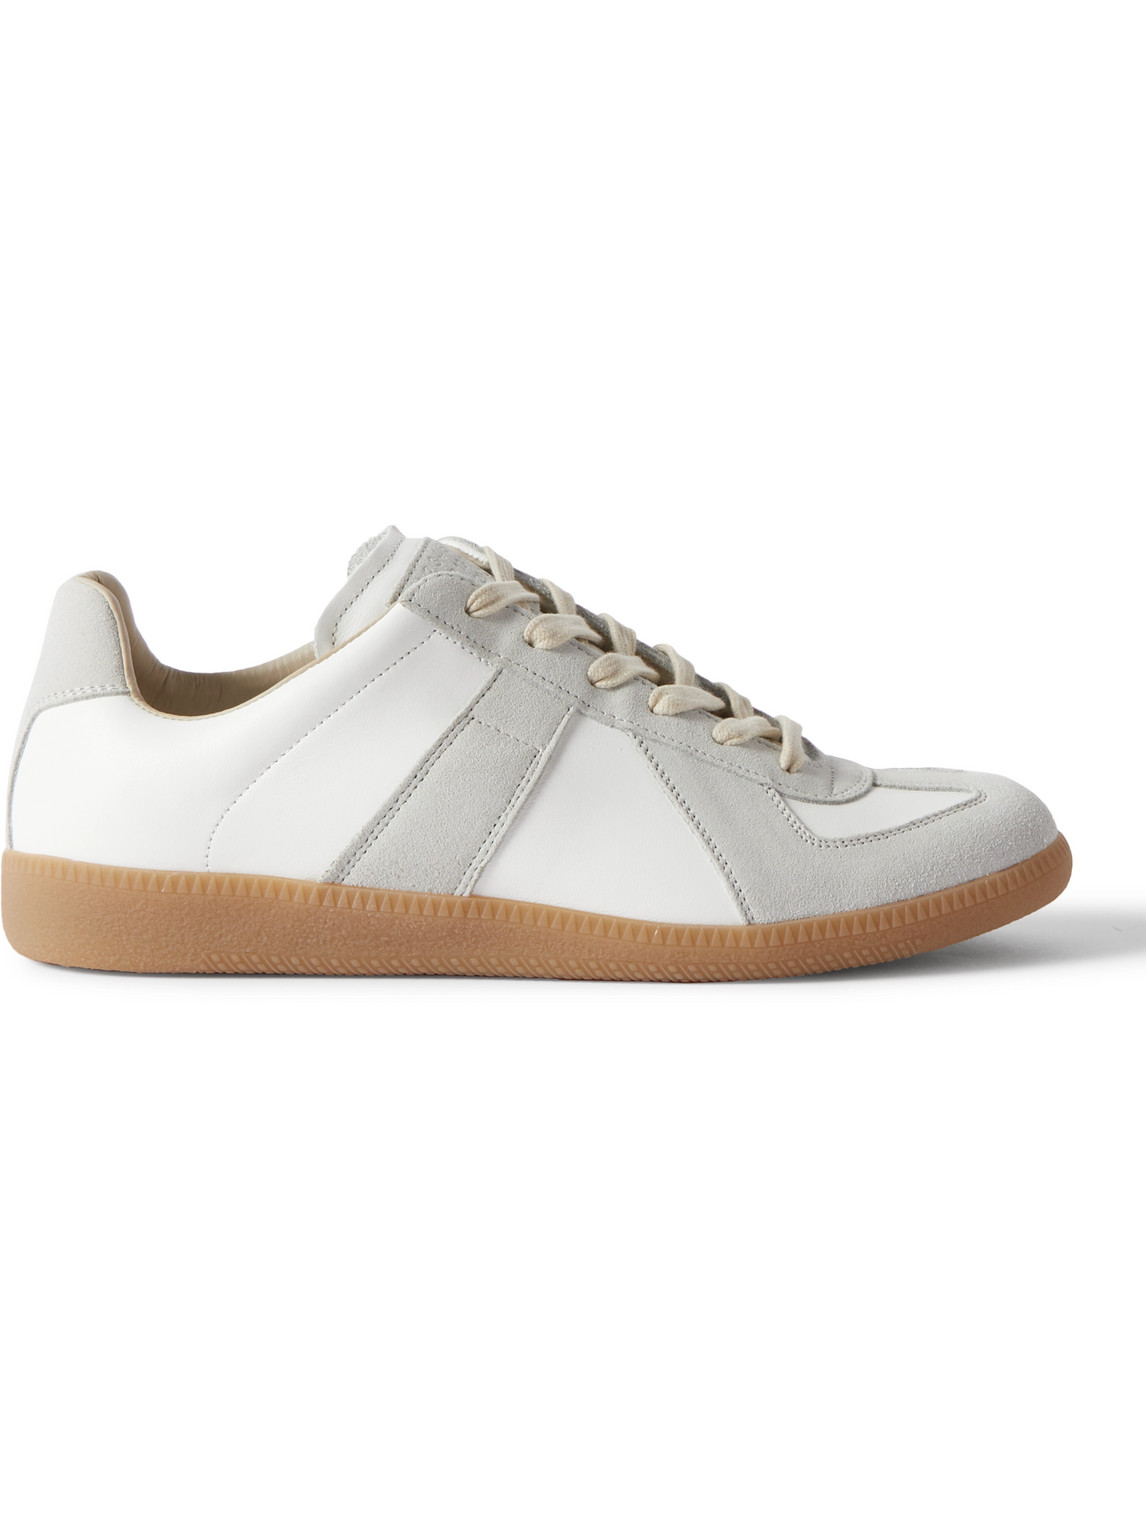 Maison Margiela - Replica Leather and Suede Sneakers - Men - White - EU 43 von Maison Margiela